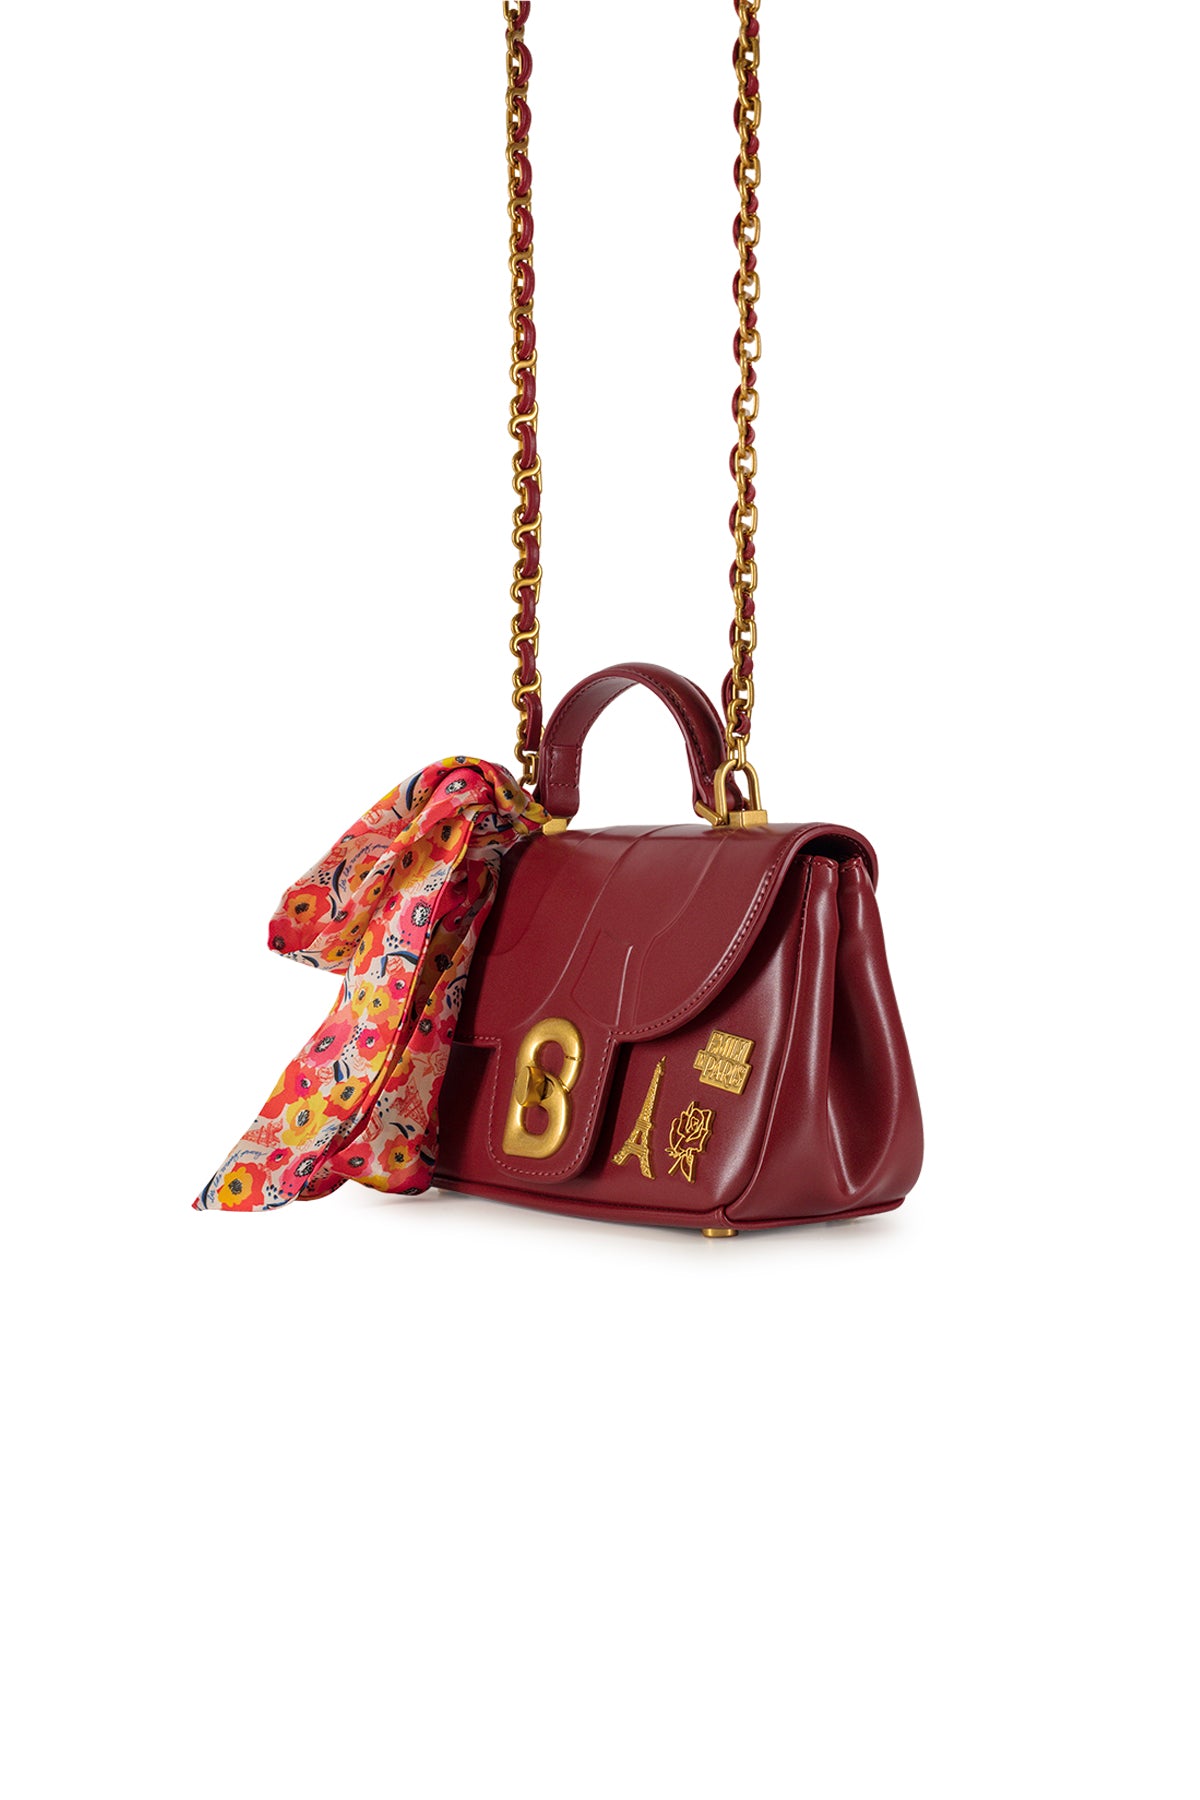 Emily Alma Flap Bag Small - Le Rouge